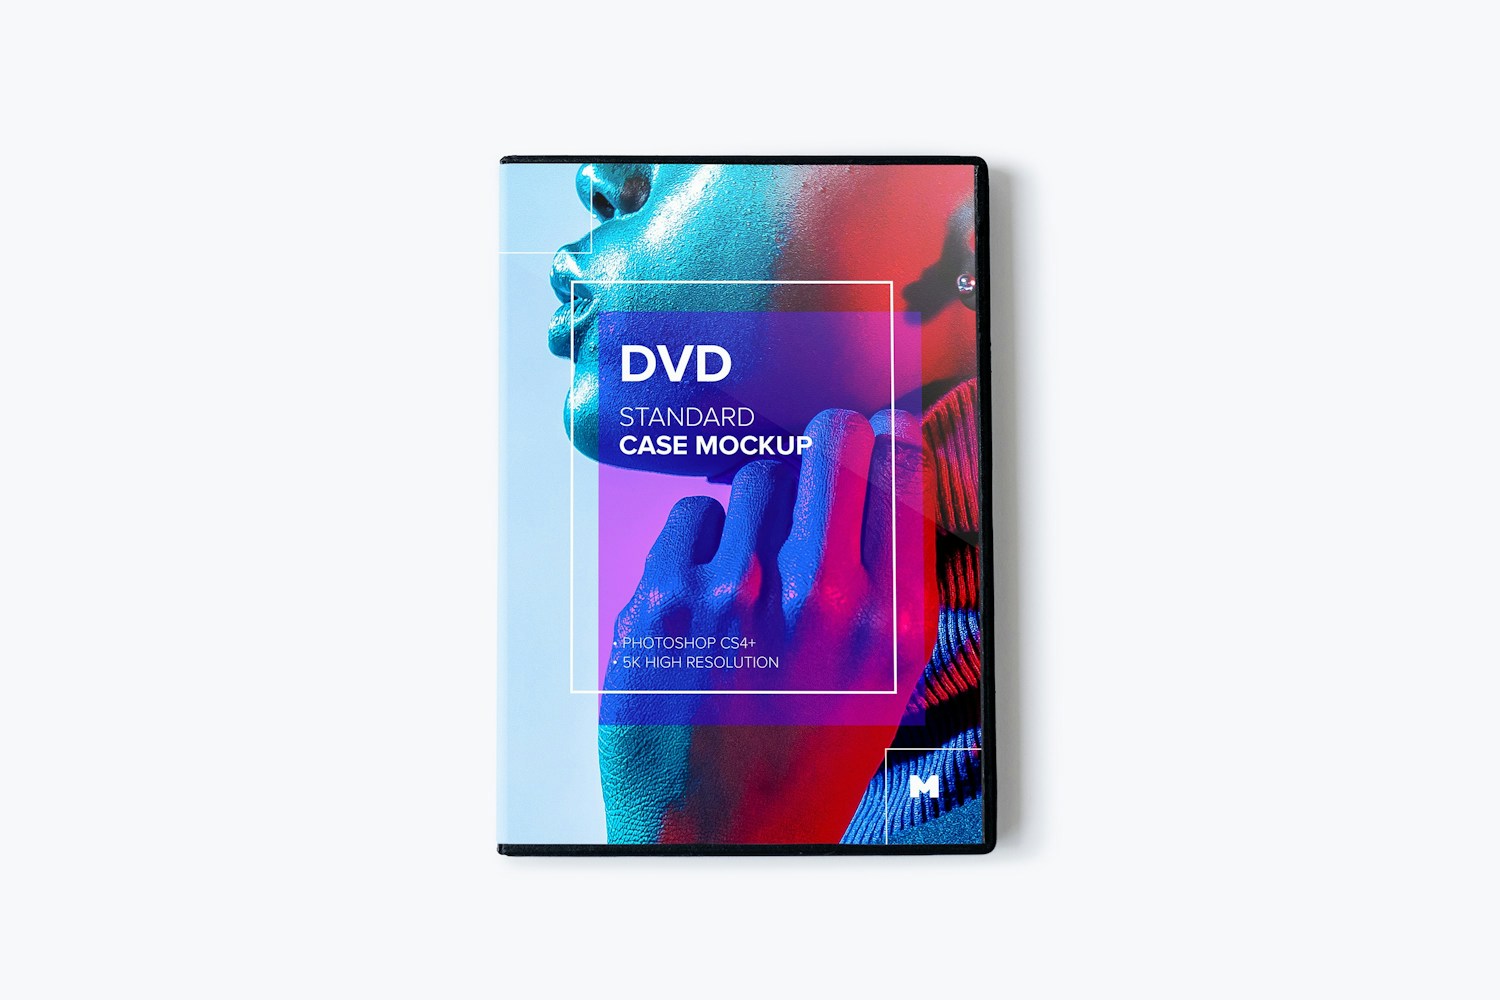 Standard DVD Case Mockup